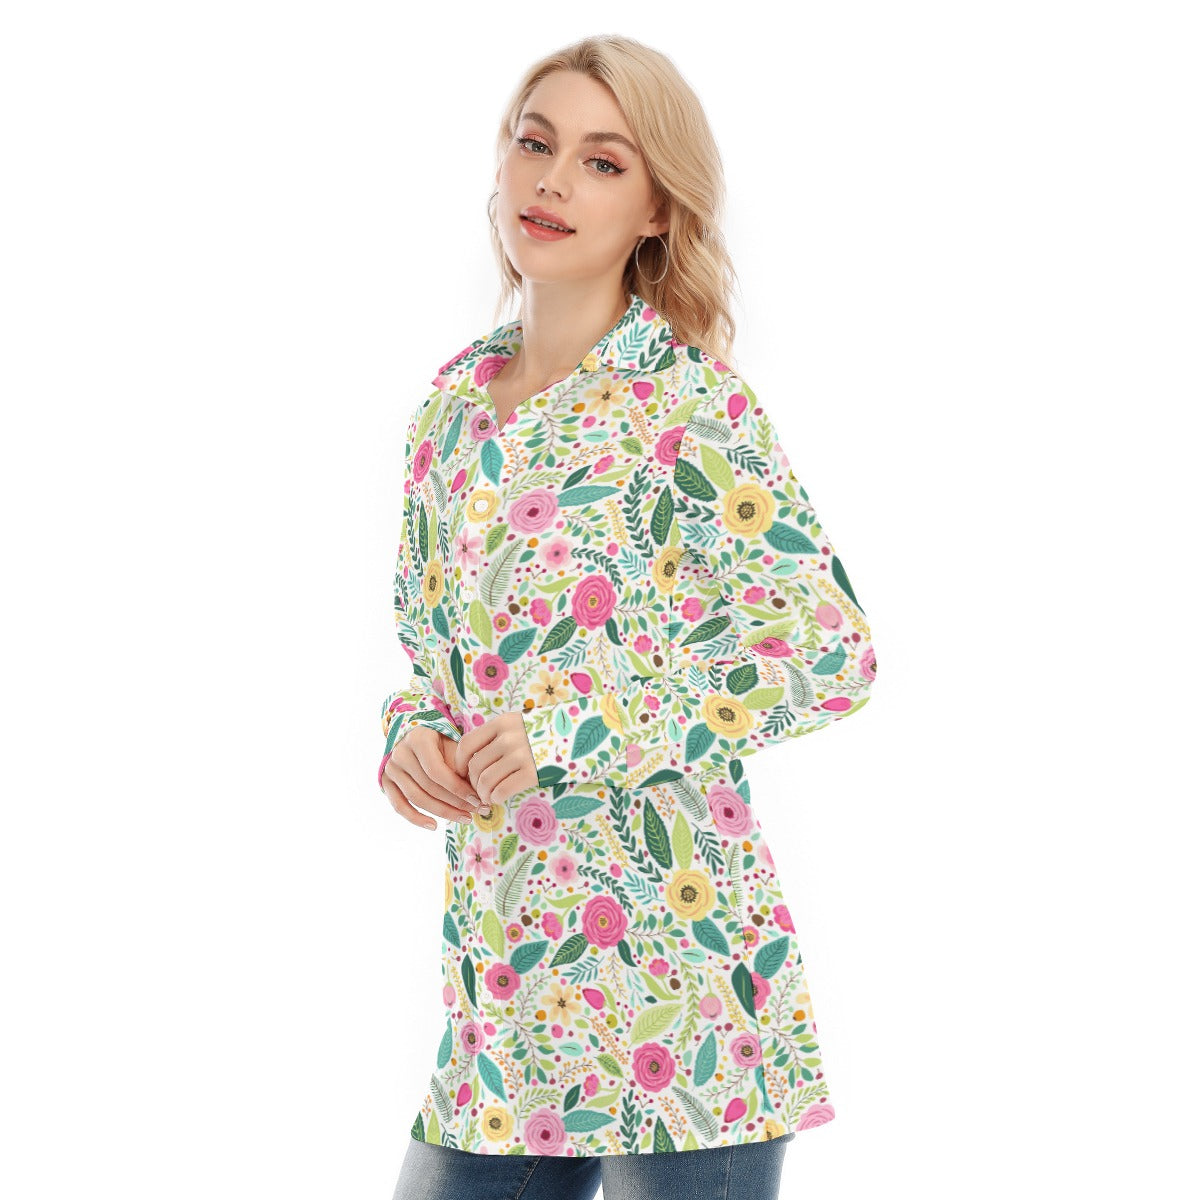 Bohemian Floral Printed Bliss Women's Long Sleeve Shirt 